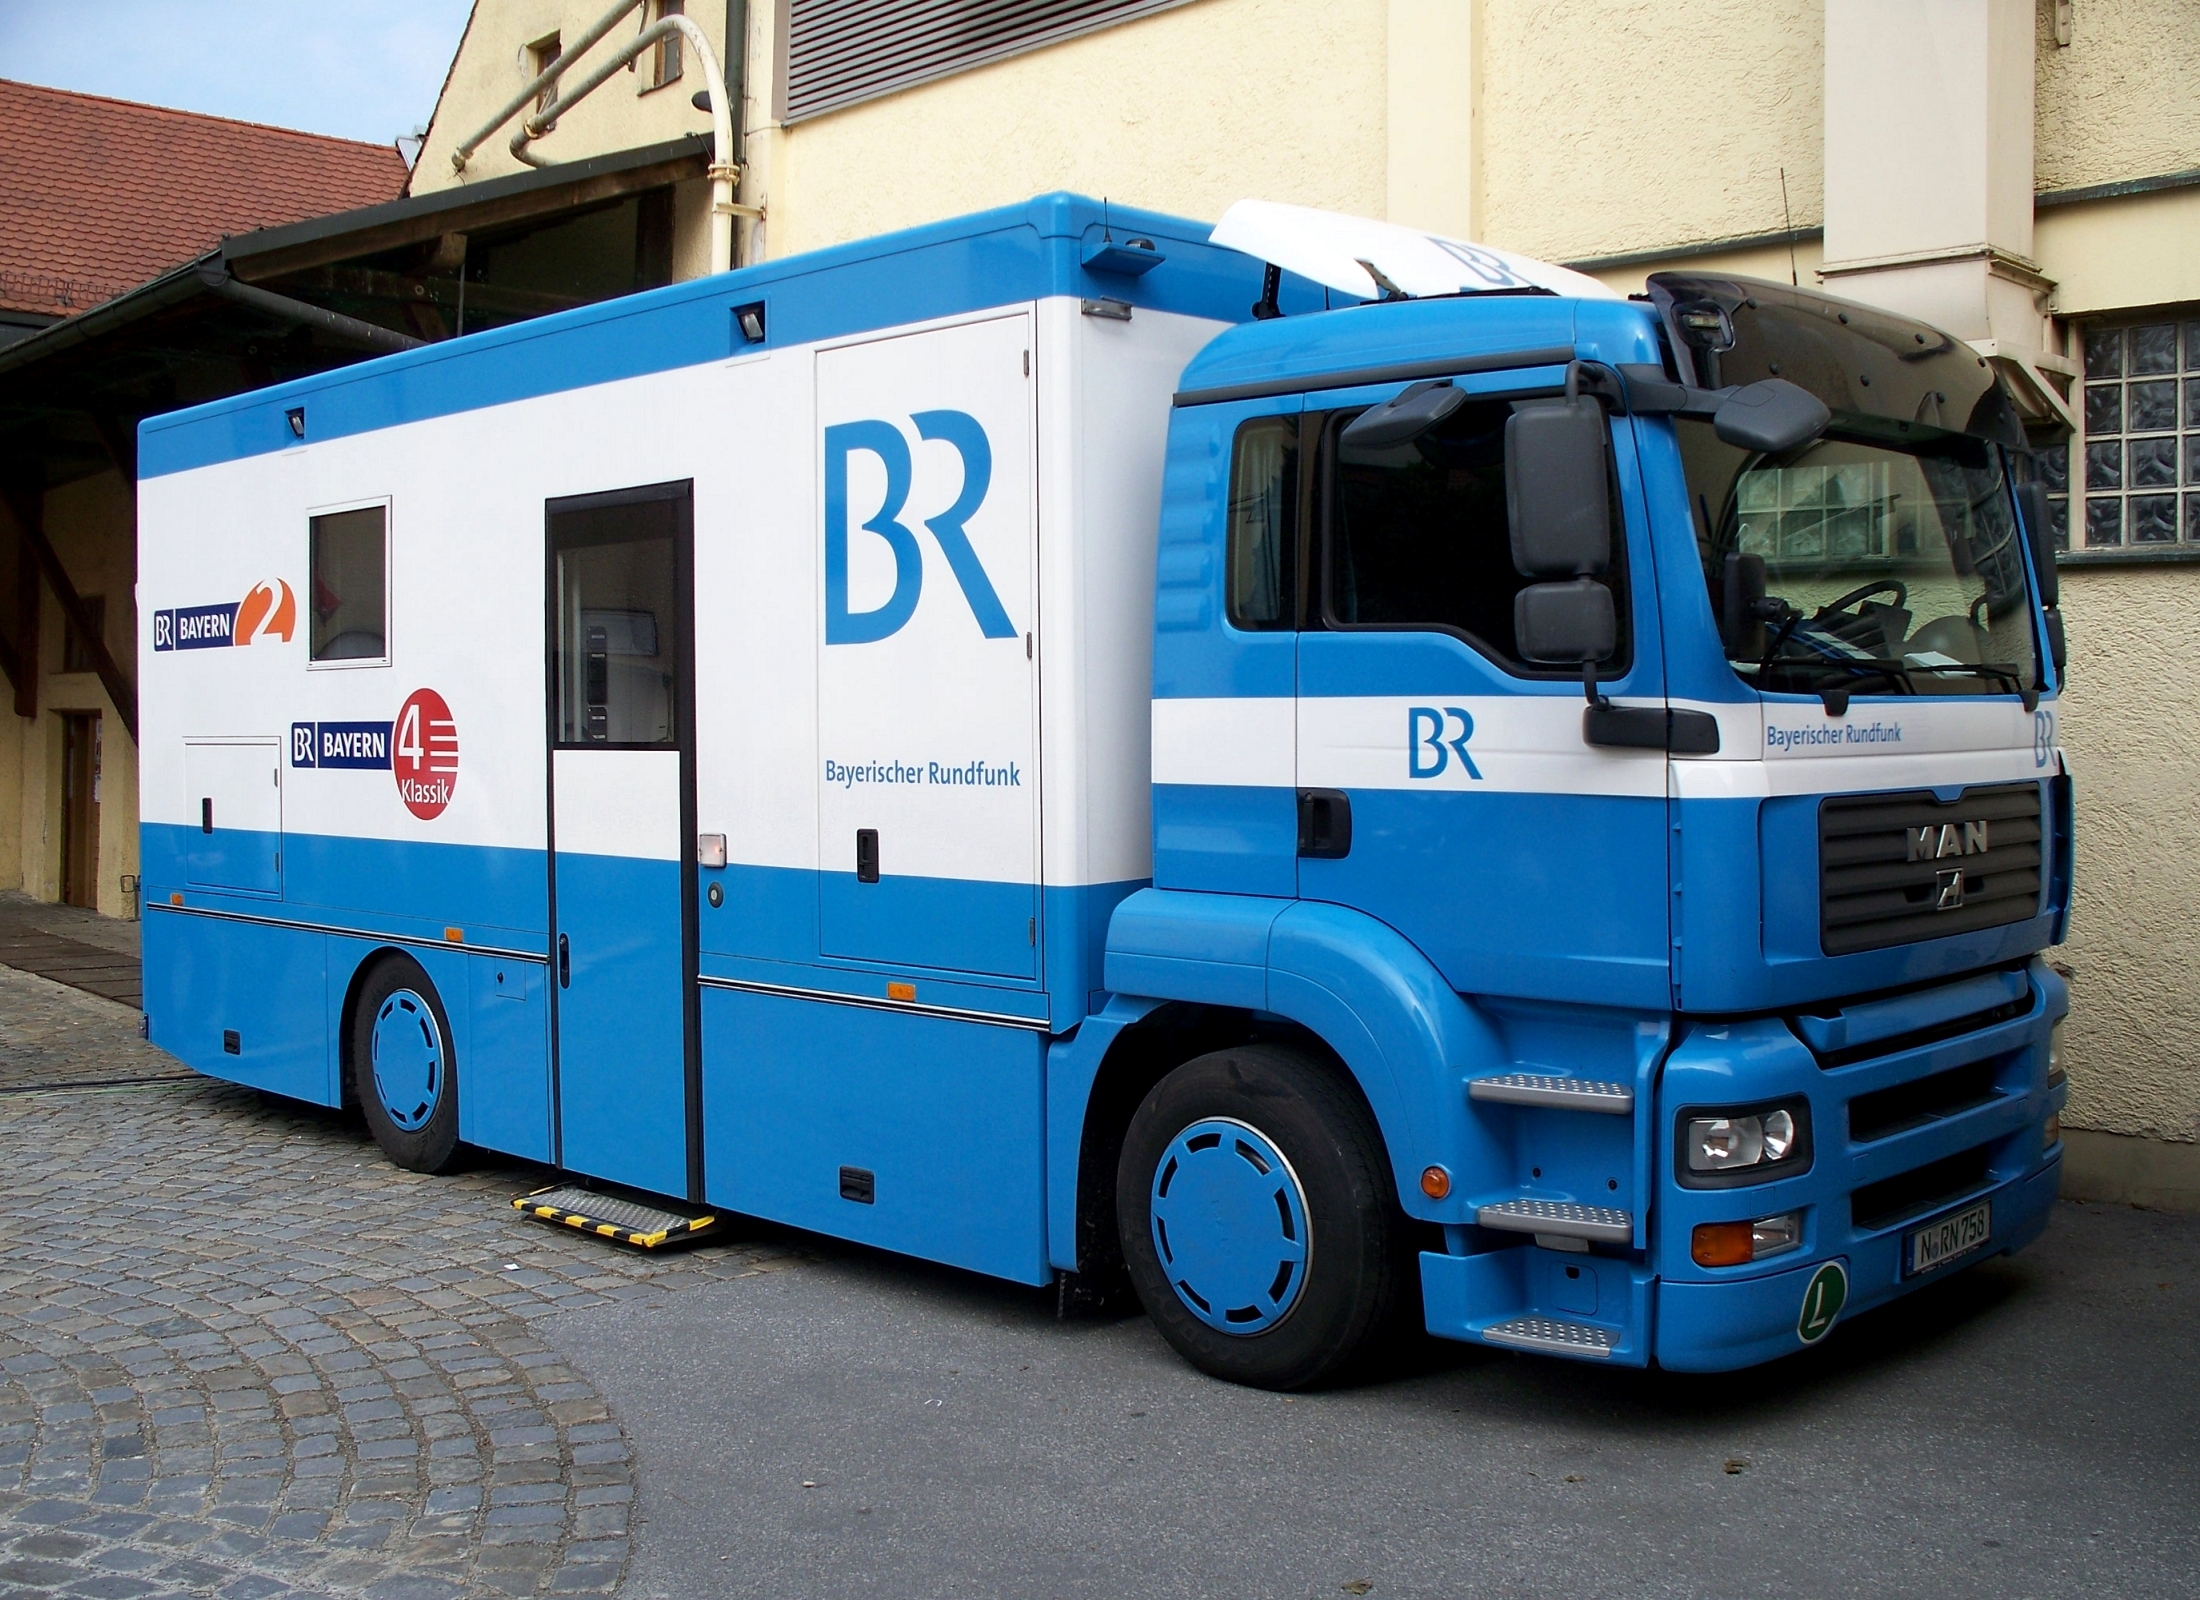 Outside broadcasting van of the Bayerischen Rundfunk